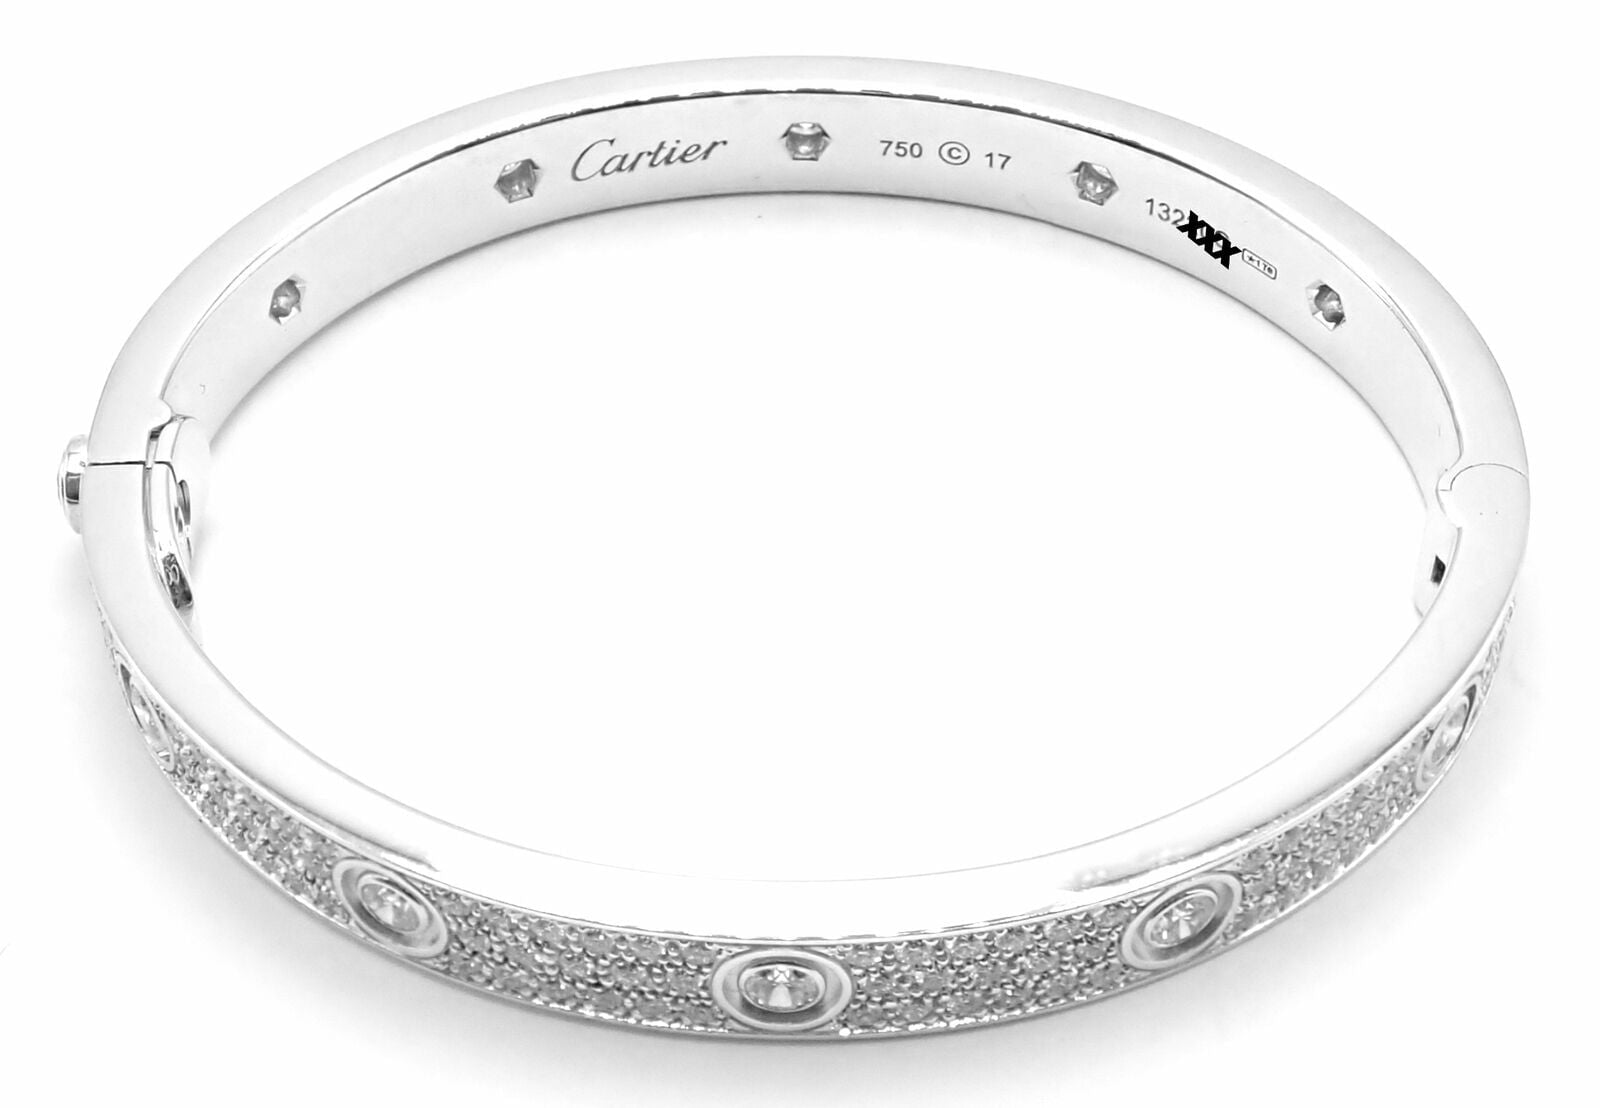 Cartier White Gold and Diamond Love Bangle Bracelet, Vintage Jewelry